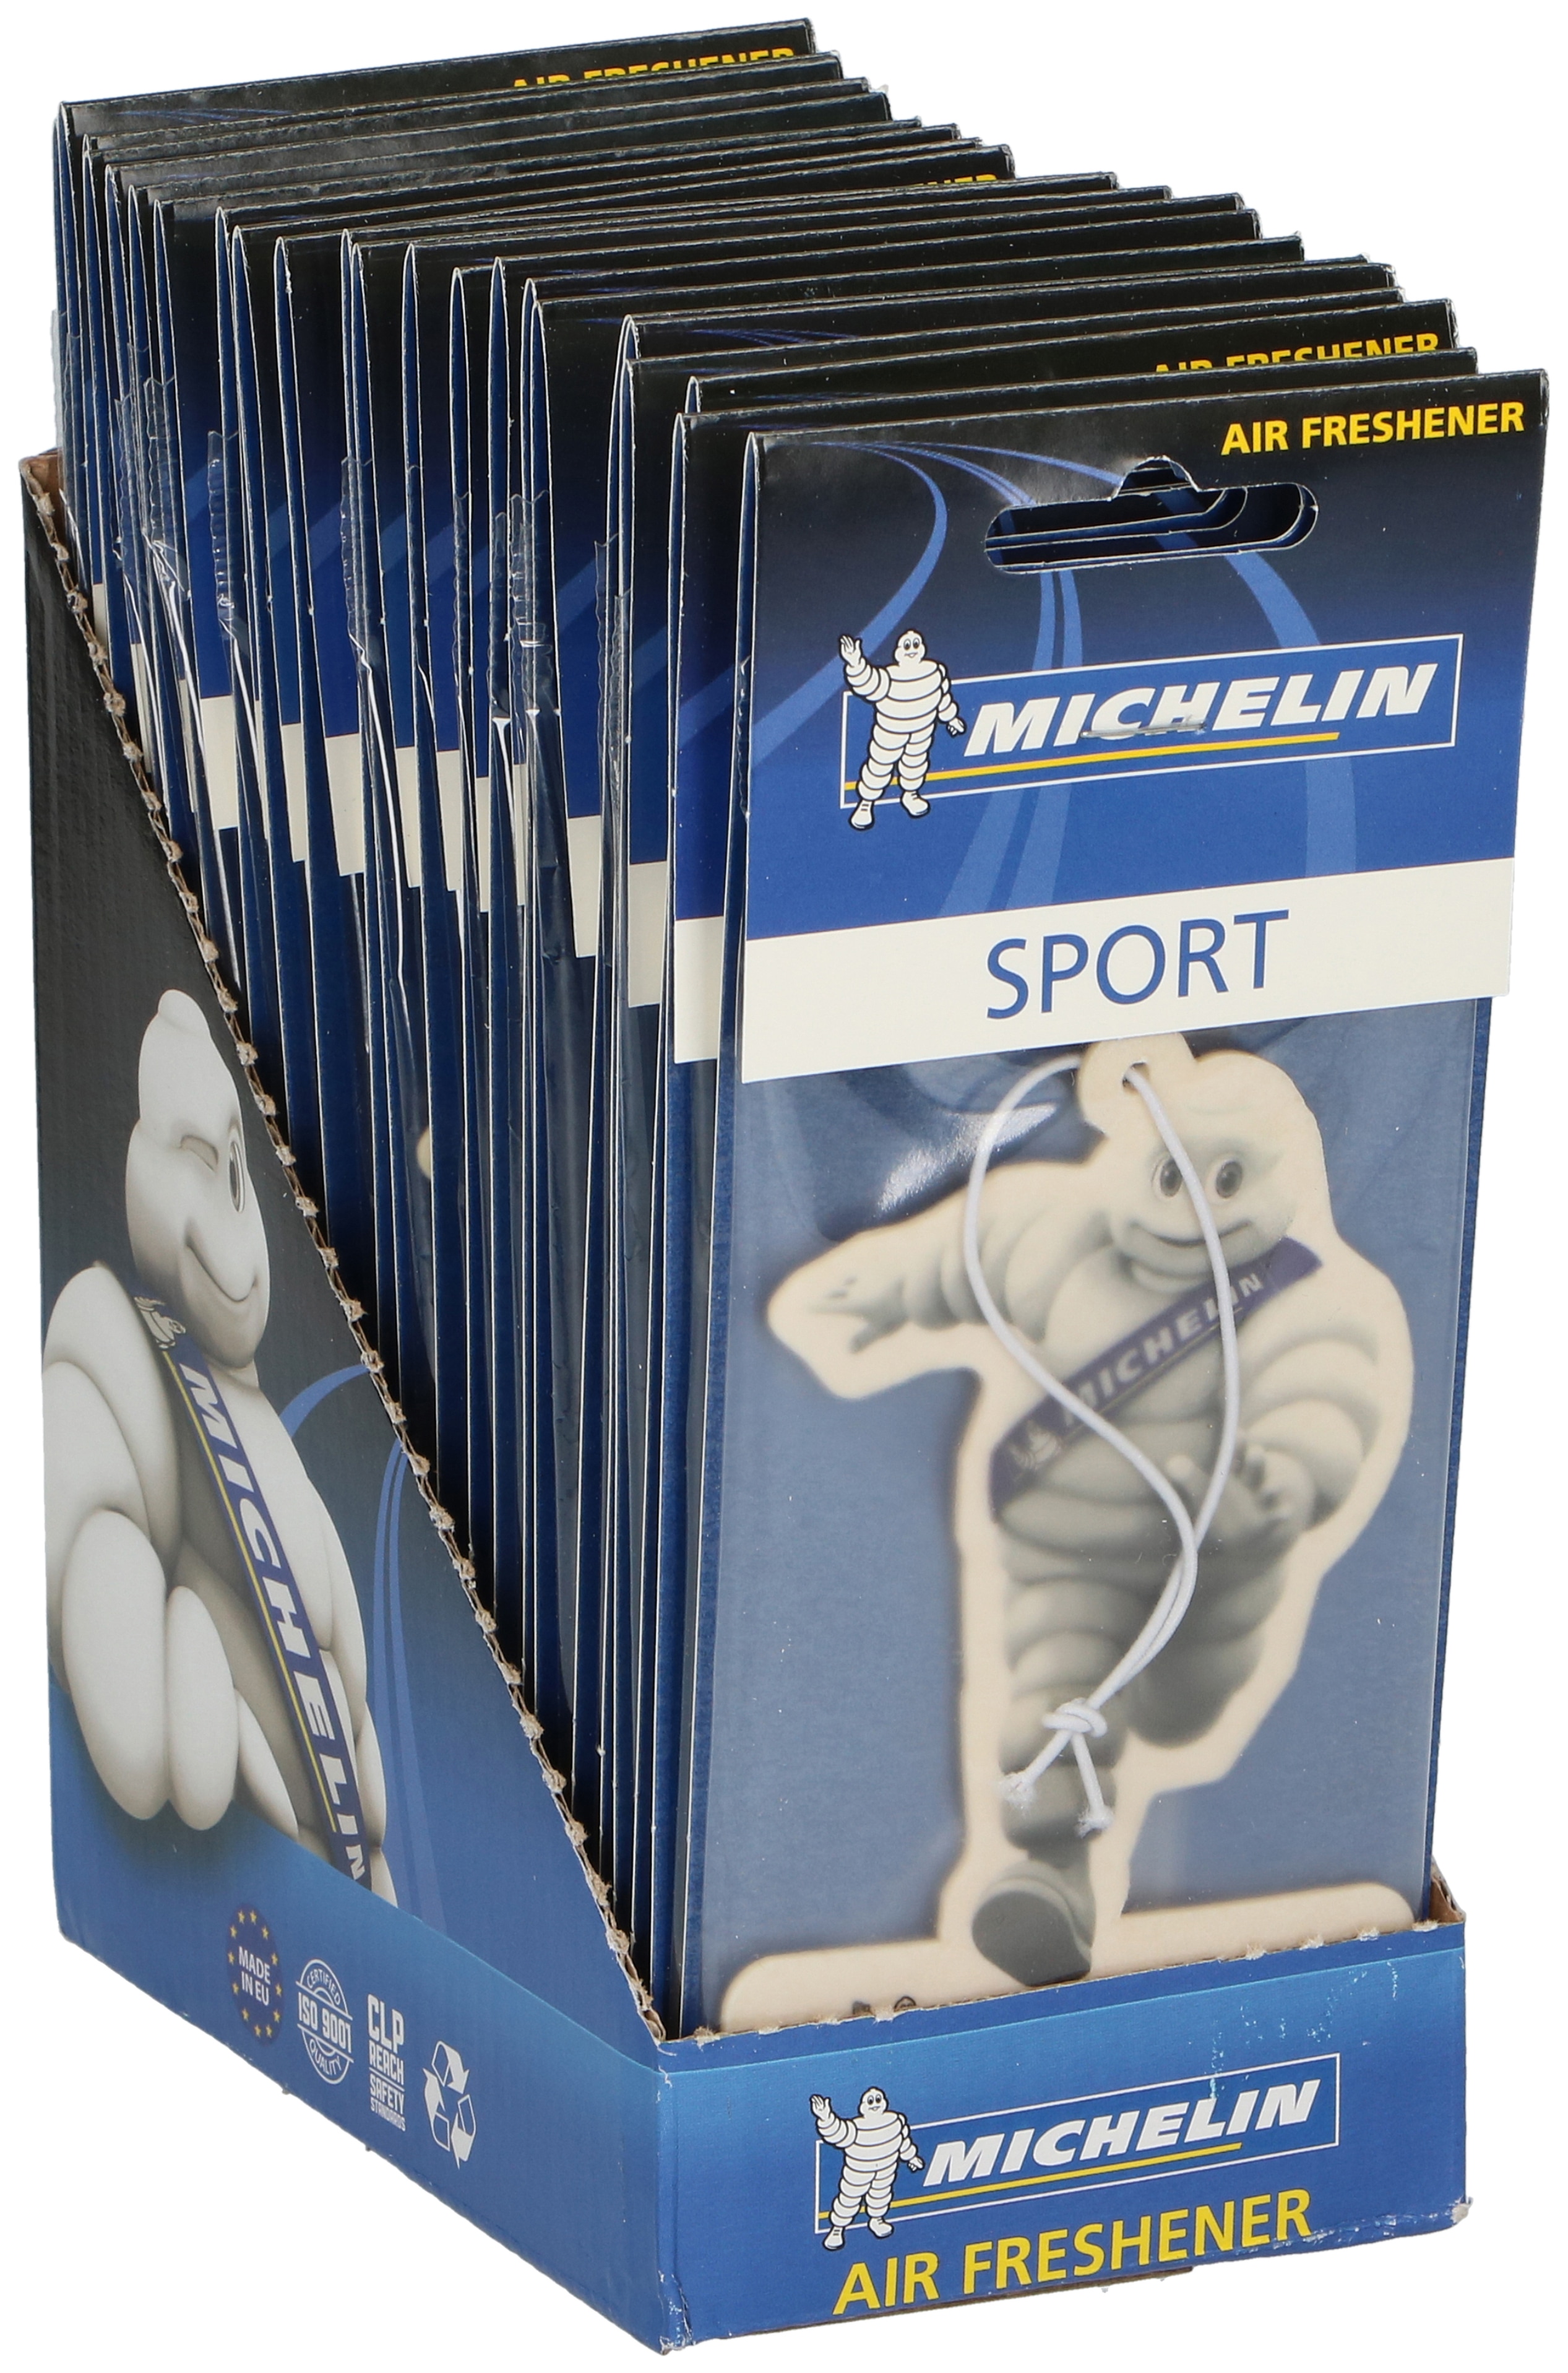 Air freshener - Michelin sport